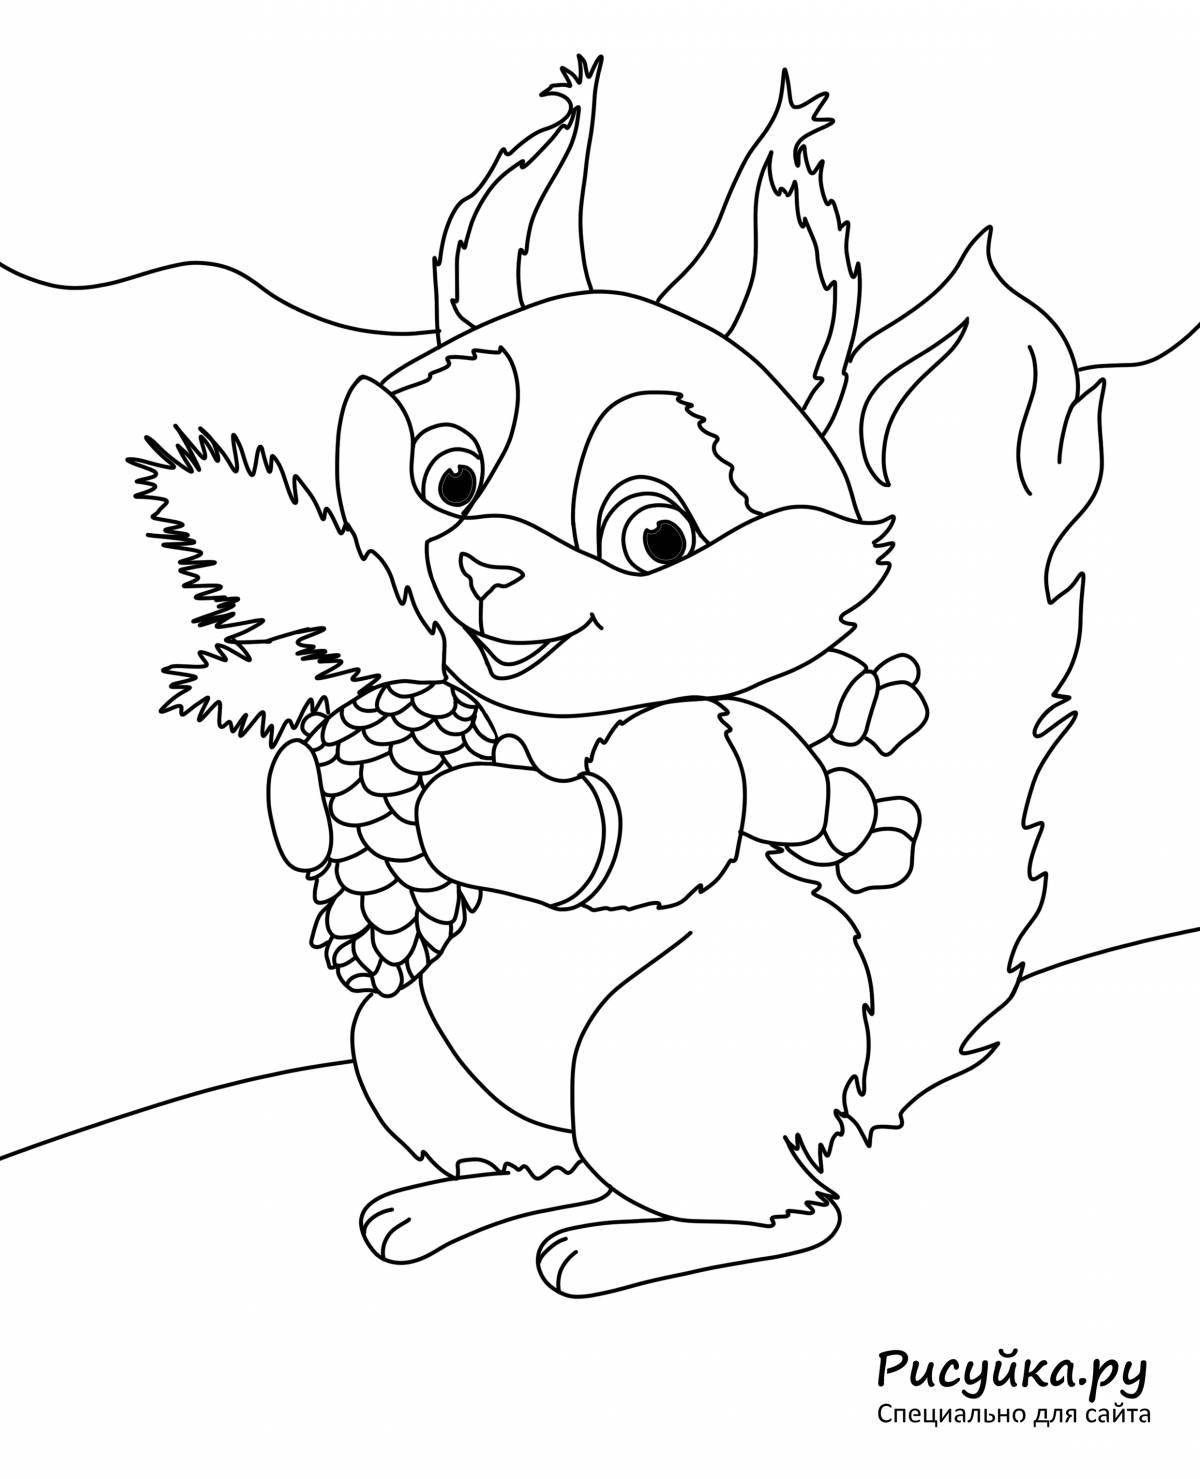 Fun coloring squirrel with a bump